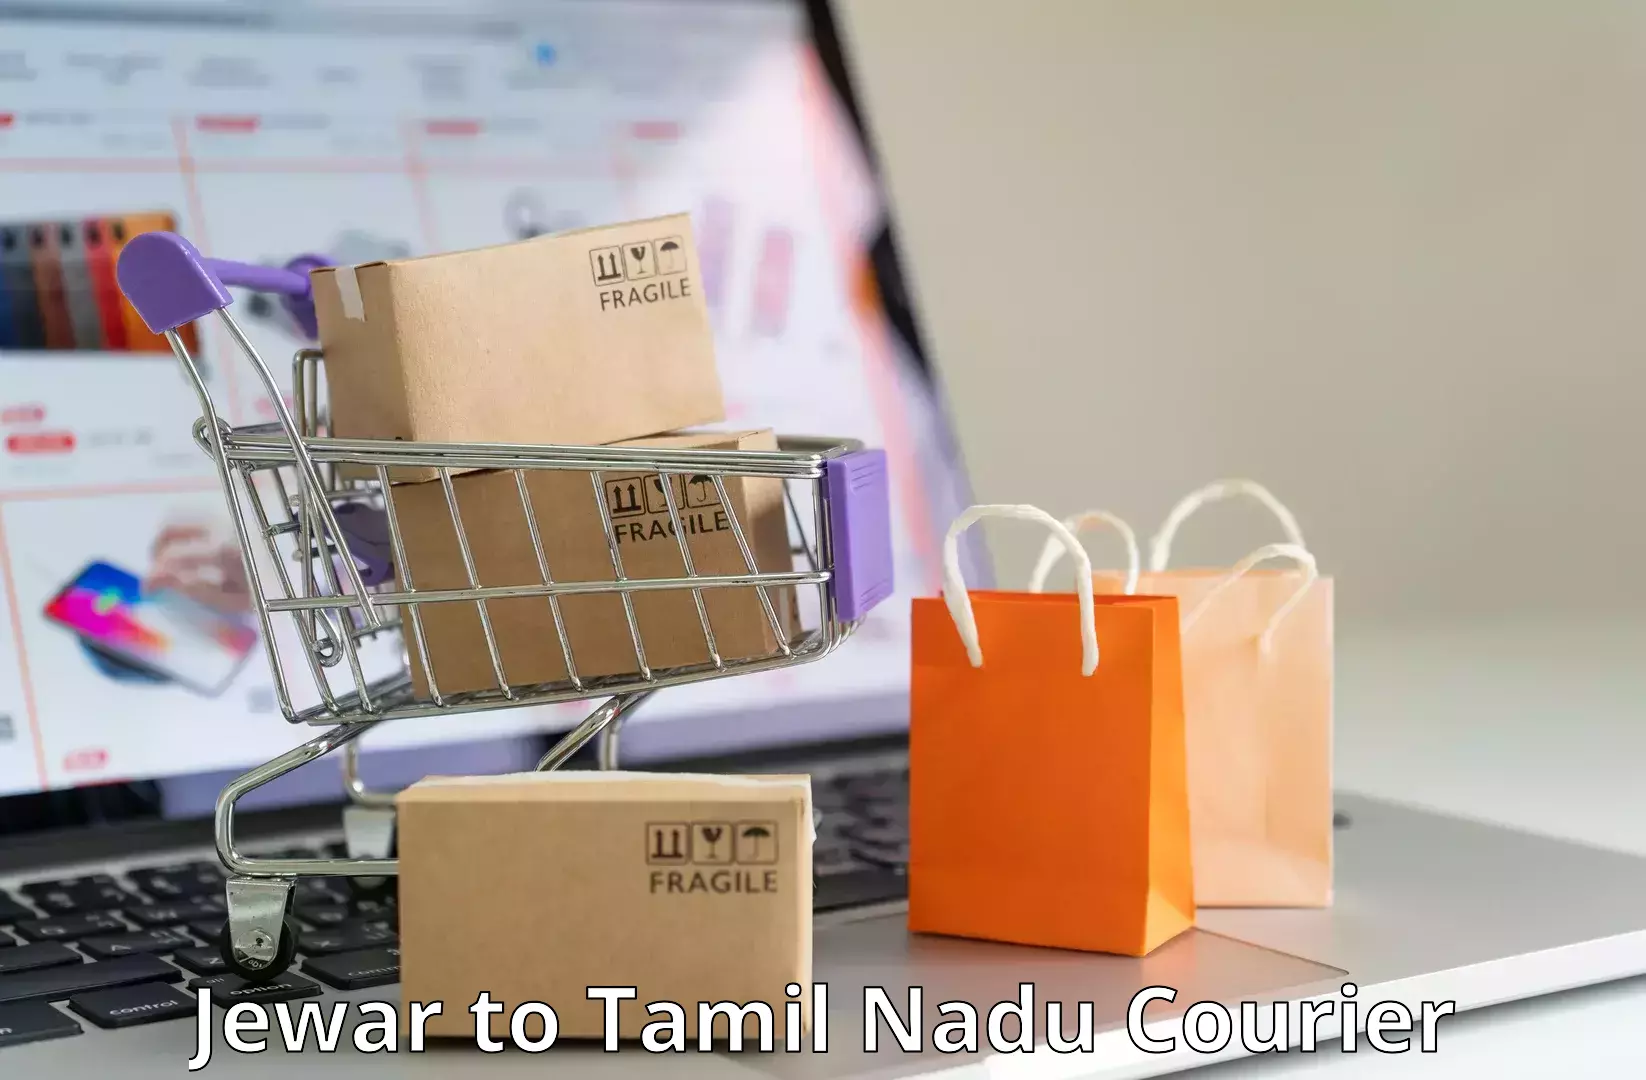 Global courier networks Jewar to Tamil Nadu